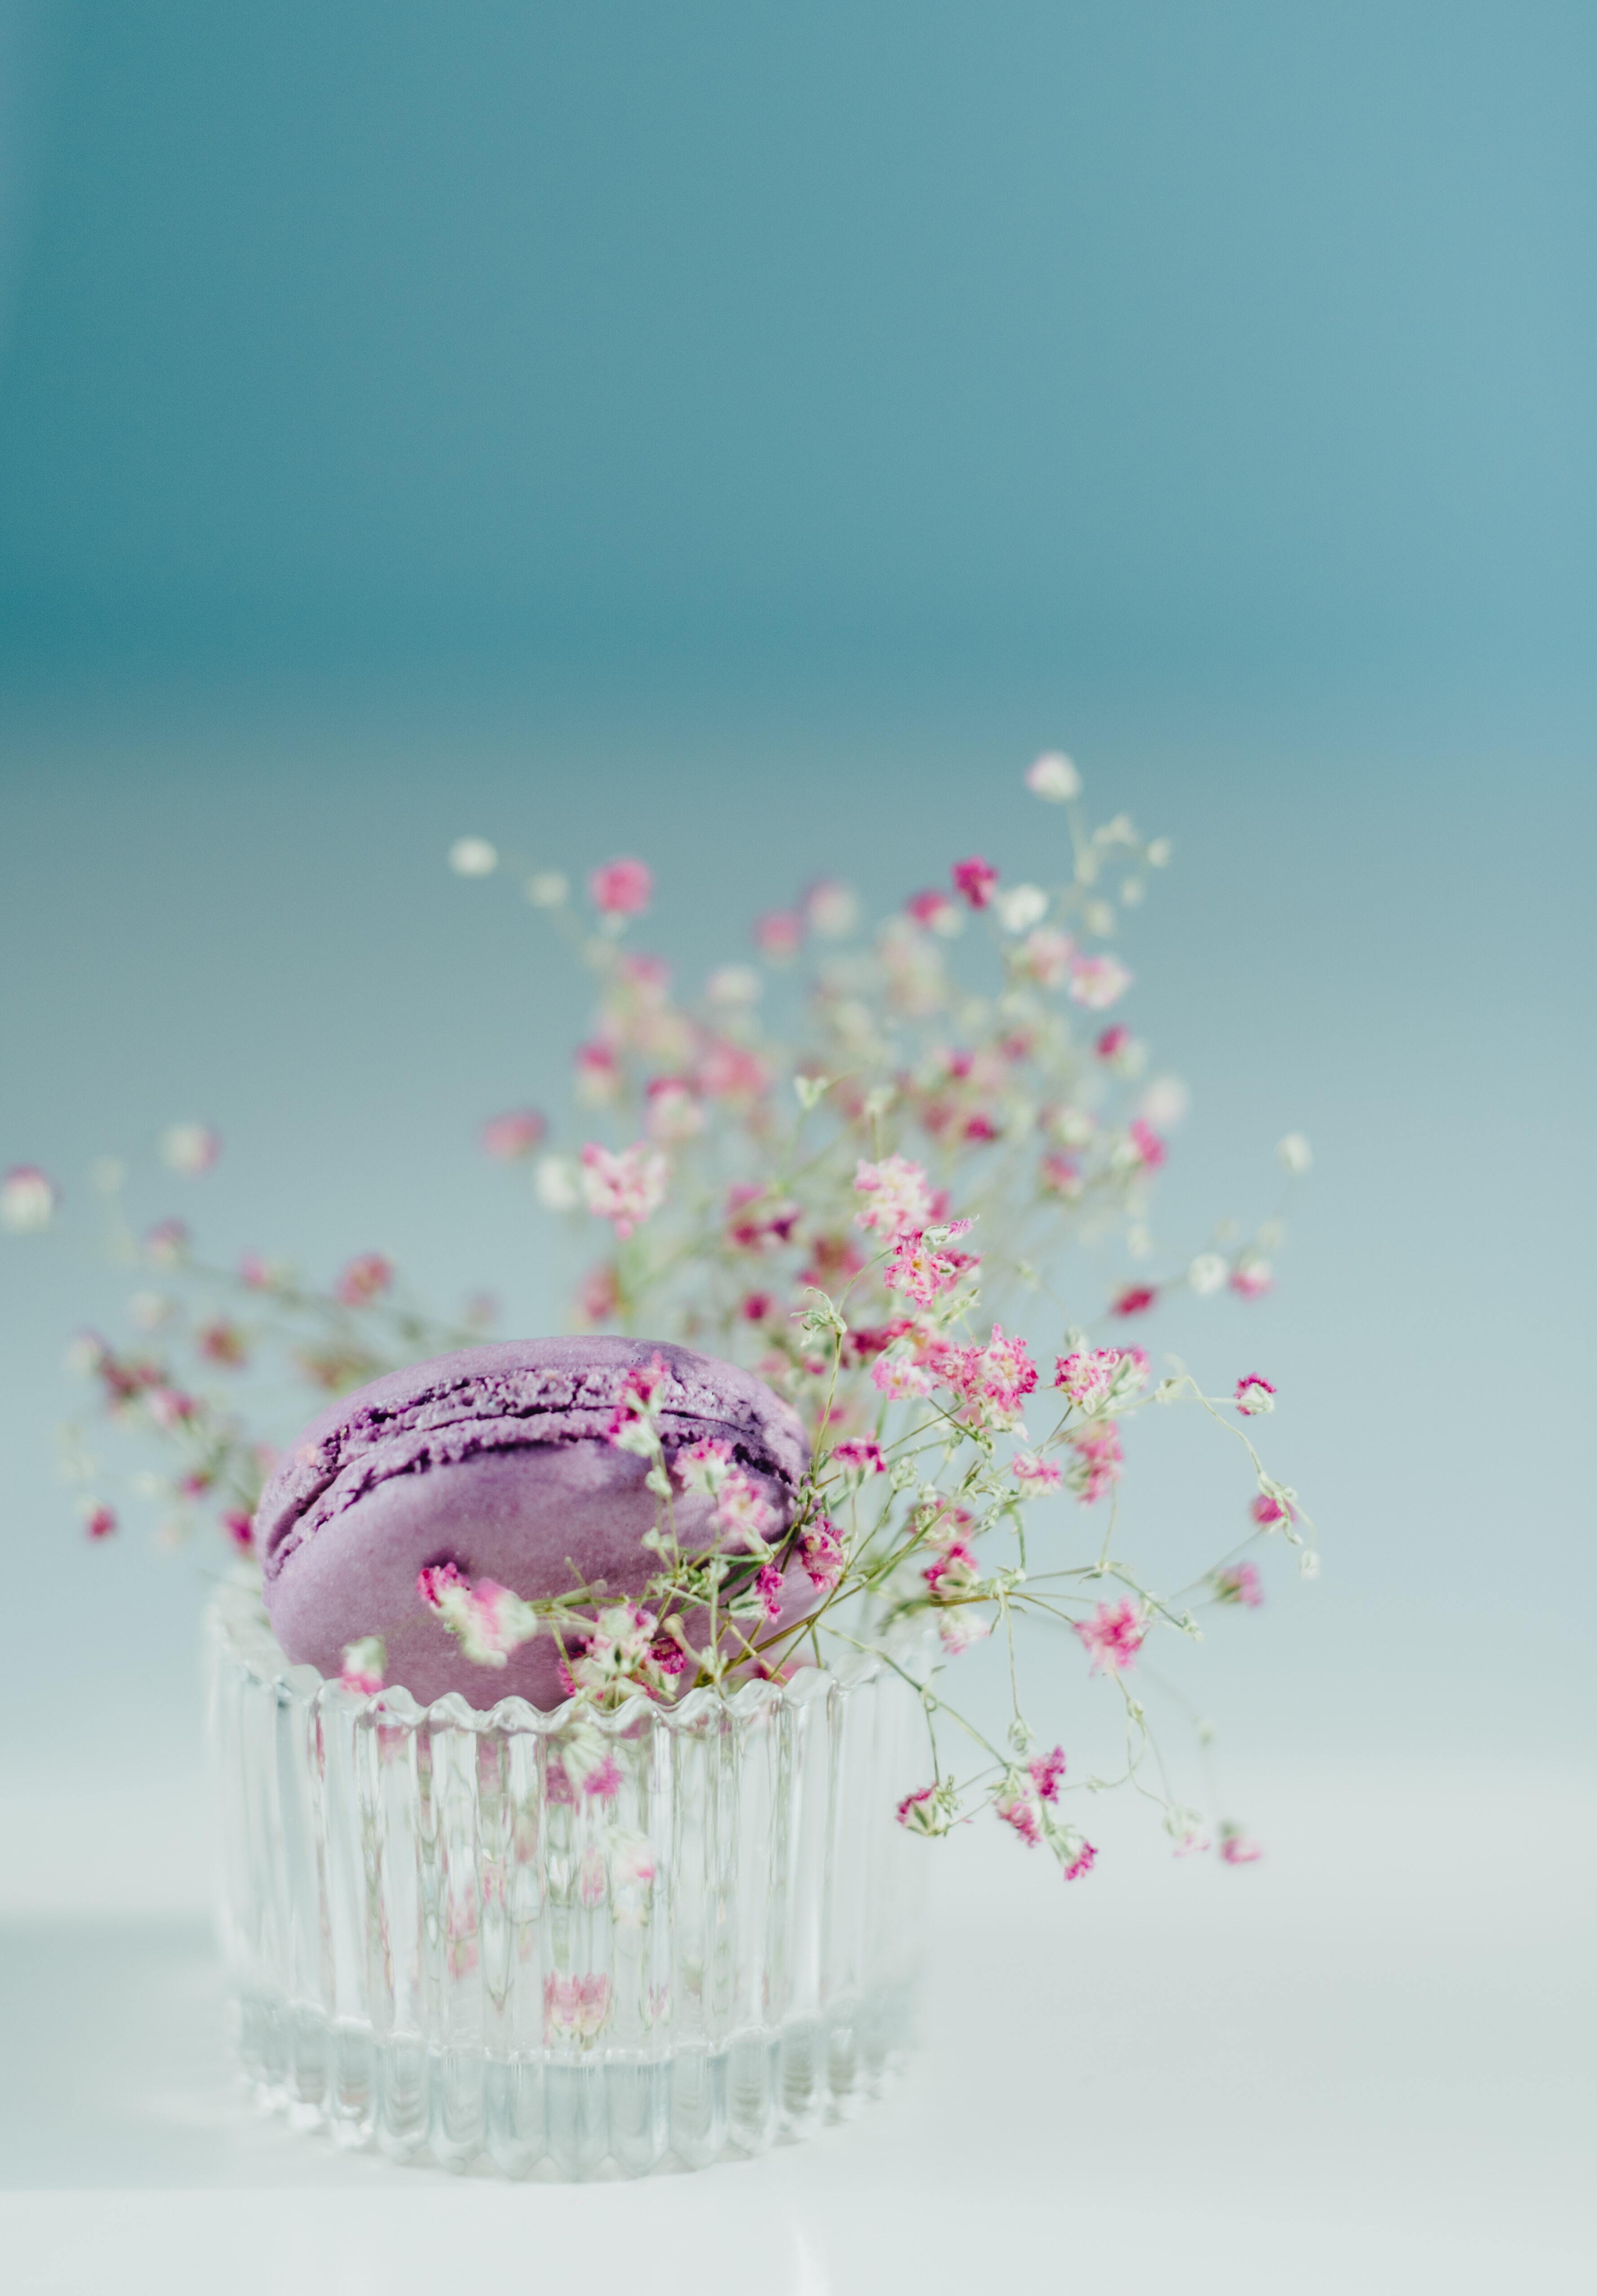 Image: Macaron, cookies, cake, lilac, glass, flowers, photographer, Larissa Farber